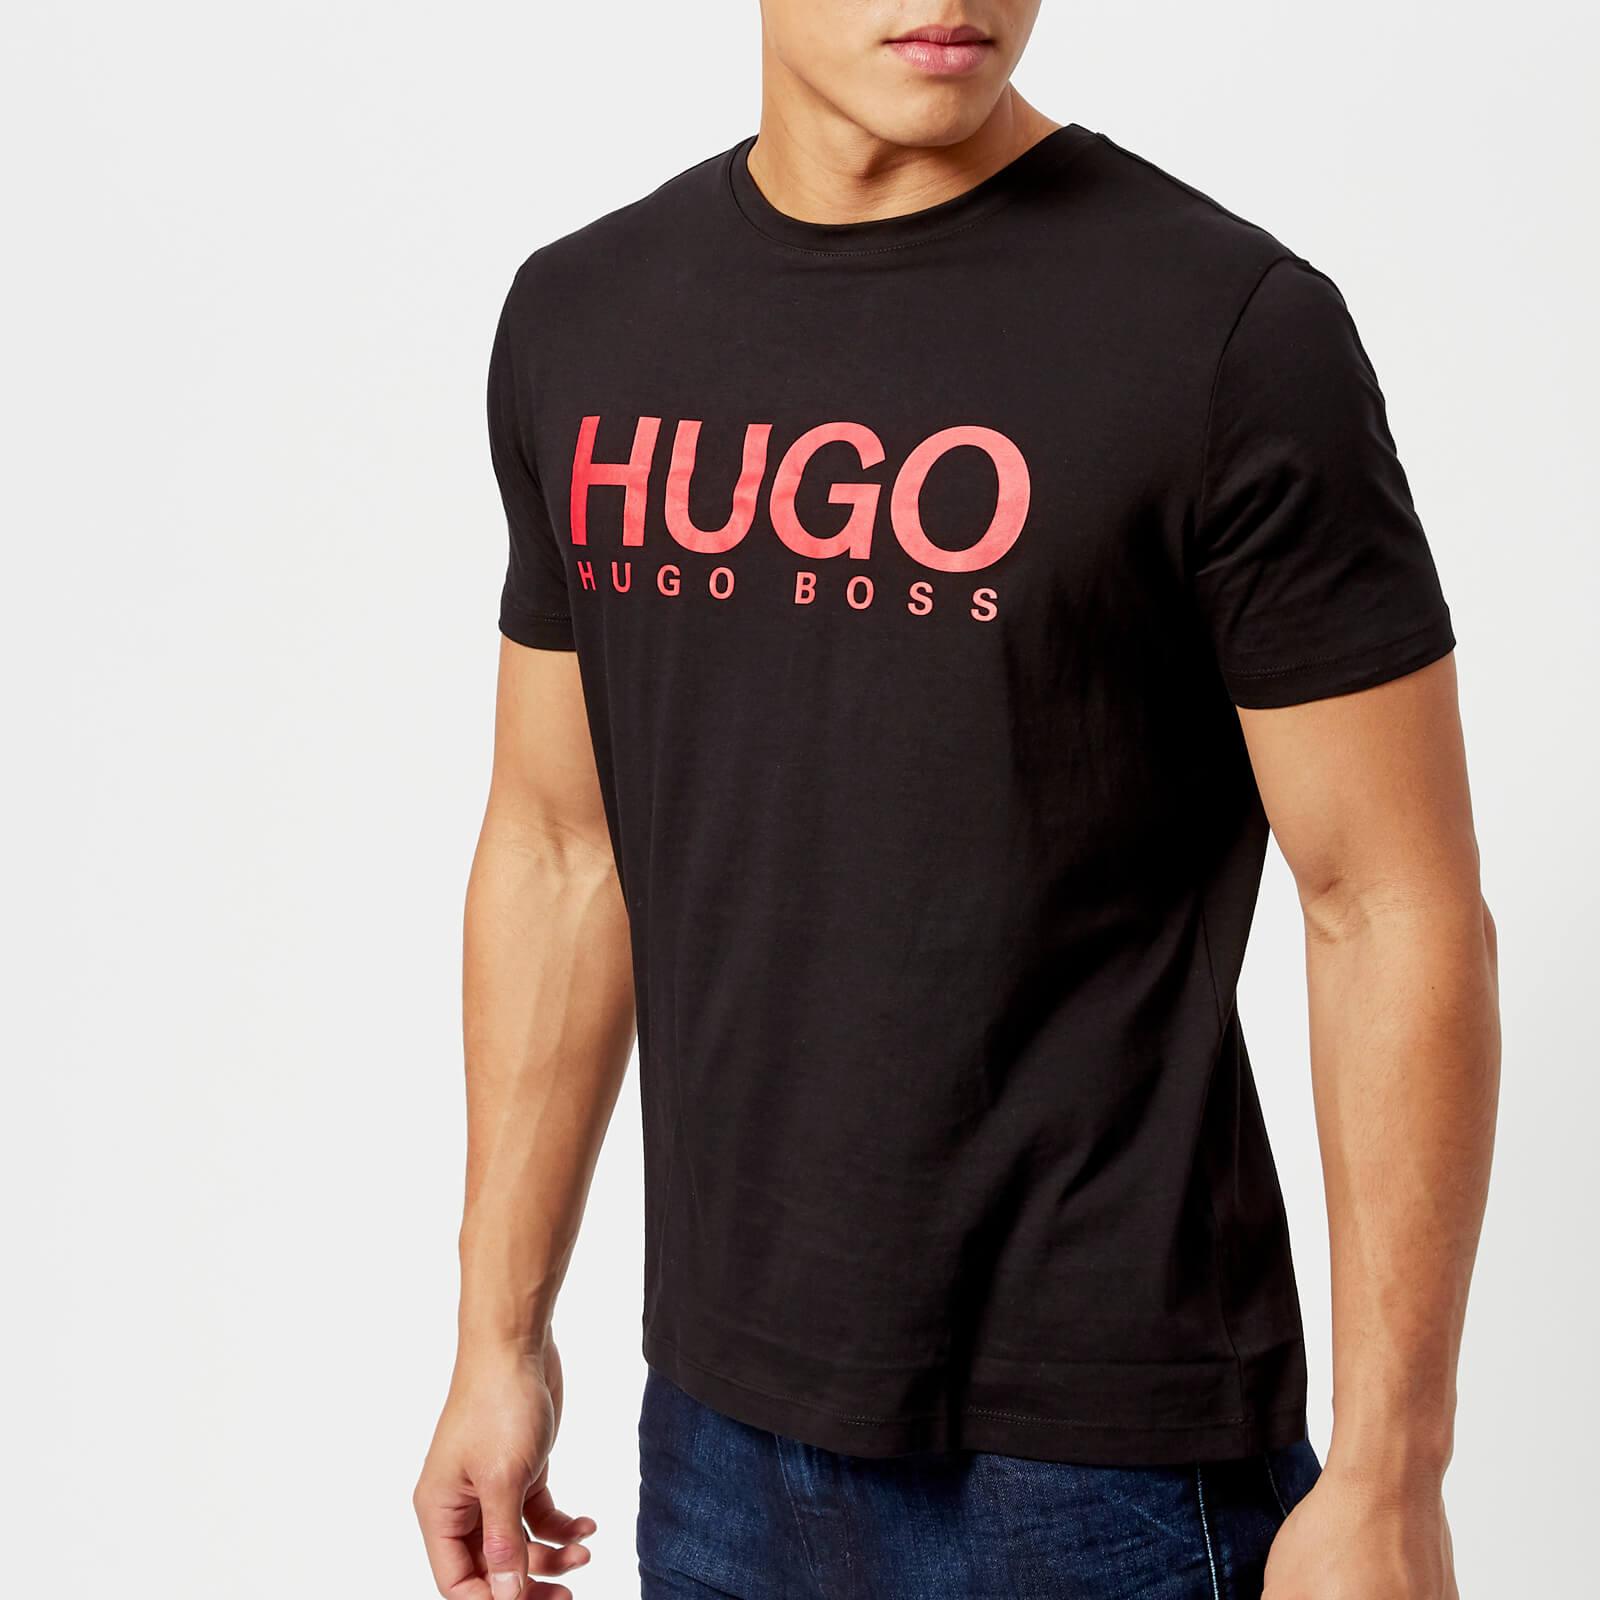 Футболки хуго босс. Boss jugo Boss футболки. Футболка Хьюго Хьюго босс. Hugo Boss t-Shirt Black. Футболка Hugo Boss Cinema.